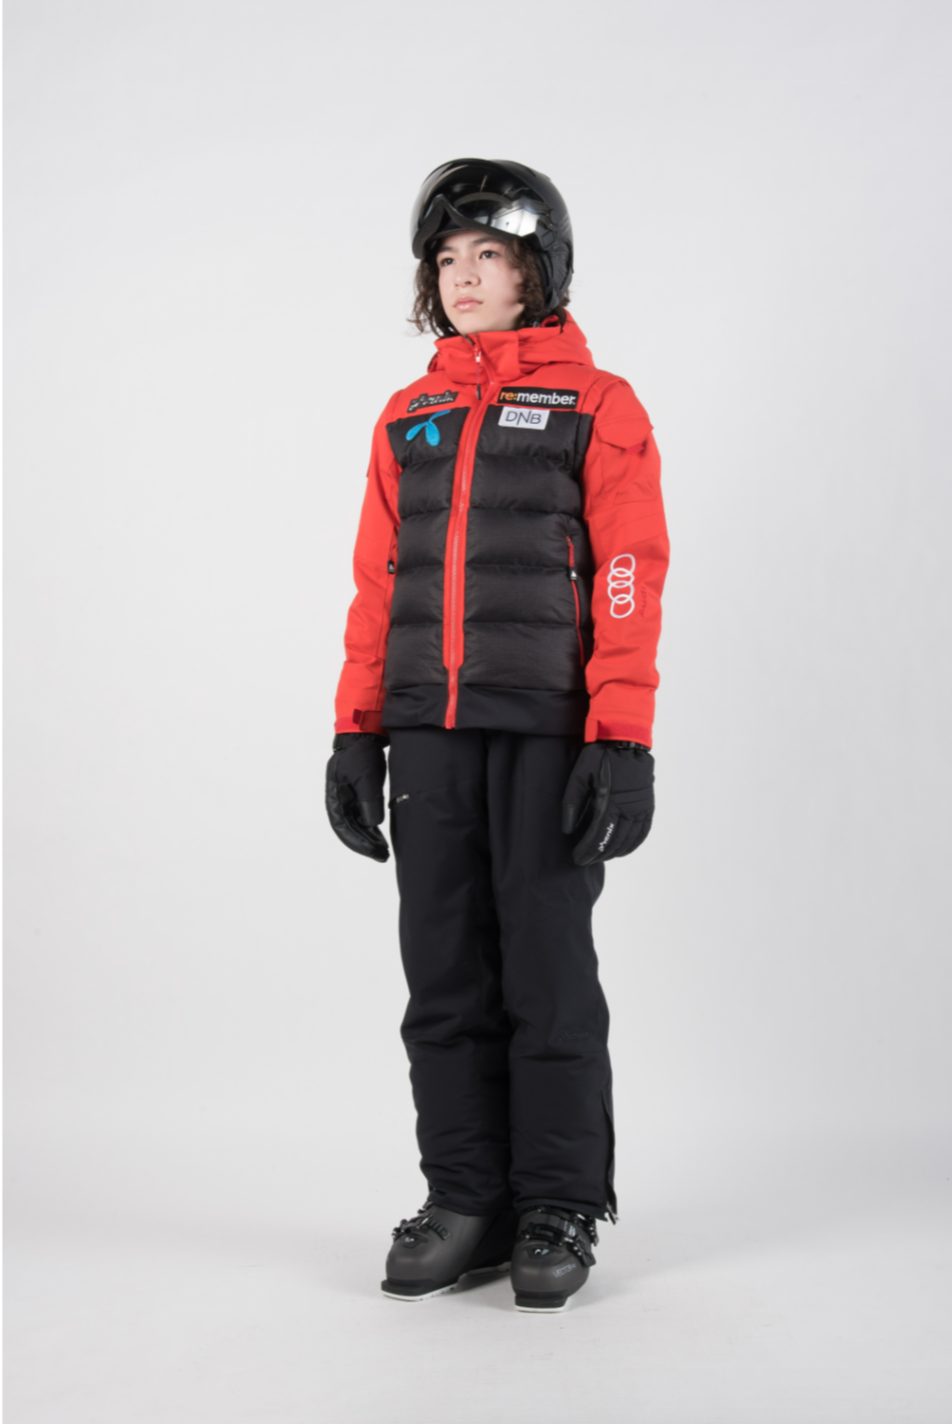 Phenix Boy's Norway Team Jacket 2022 - The Startingate